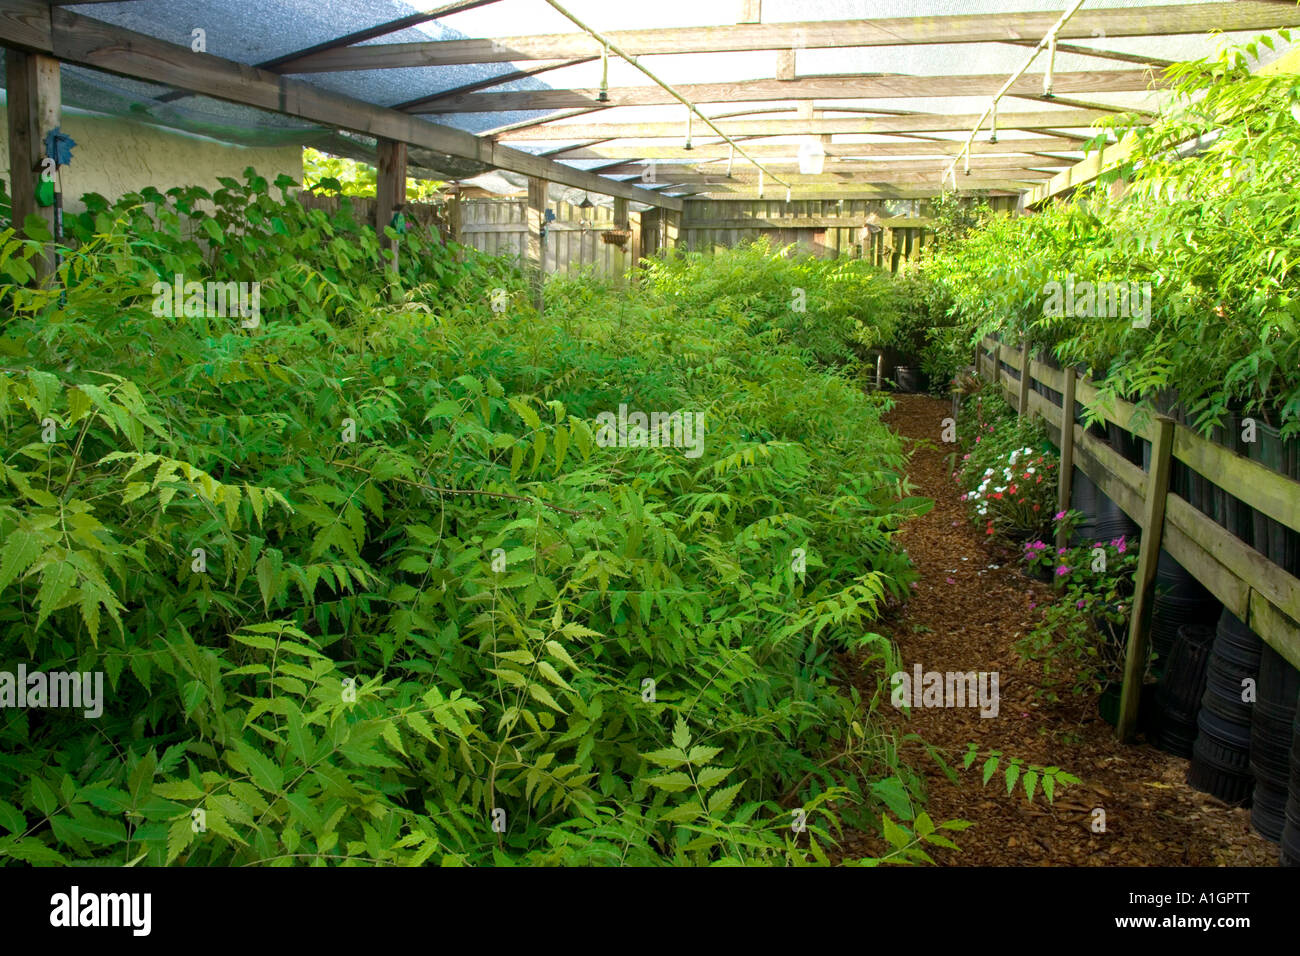 Greenhouse growing Neem seedlings, Florida Stock Photo